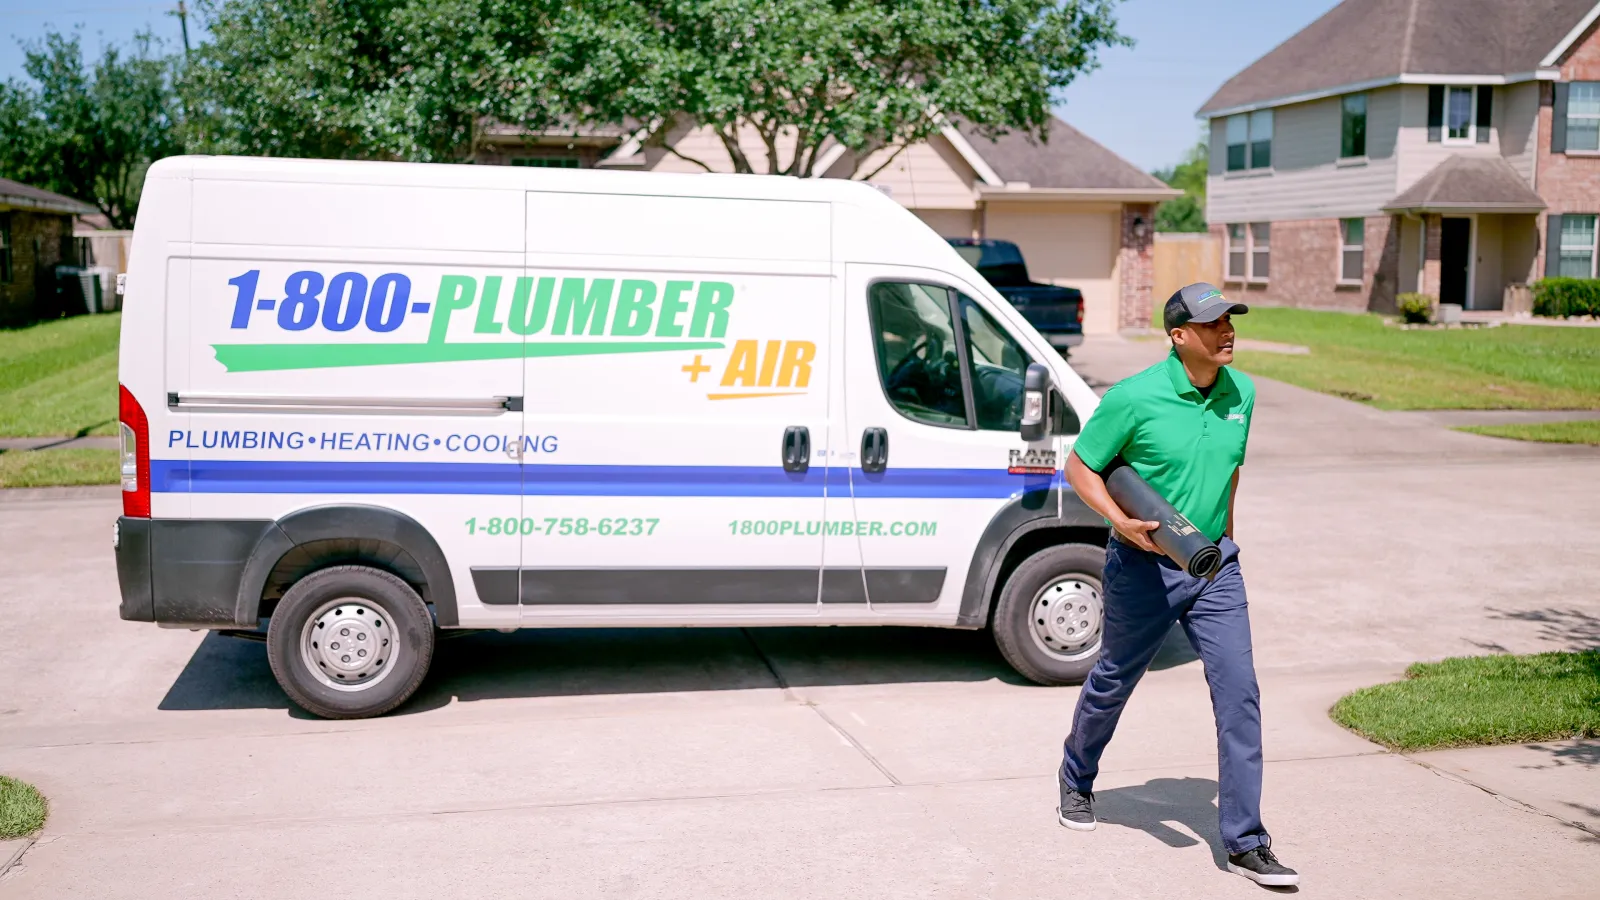 A 1-800-Plumber +Air of Monterrey van and plumber